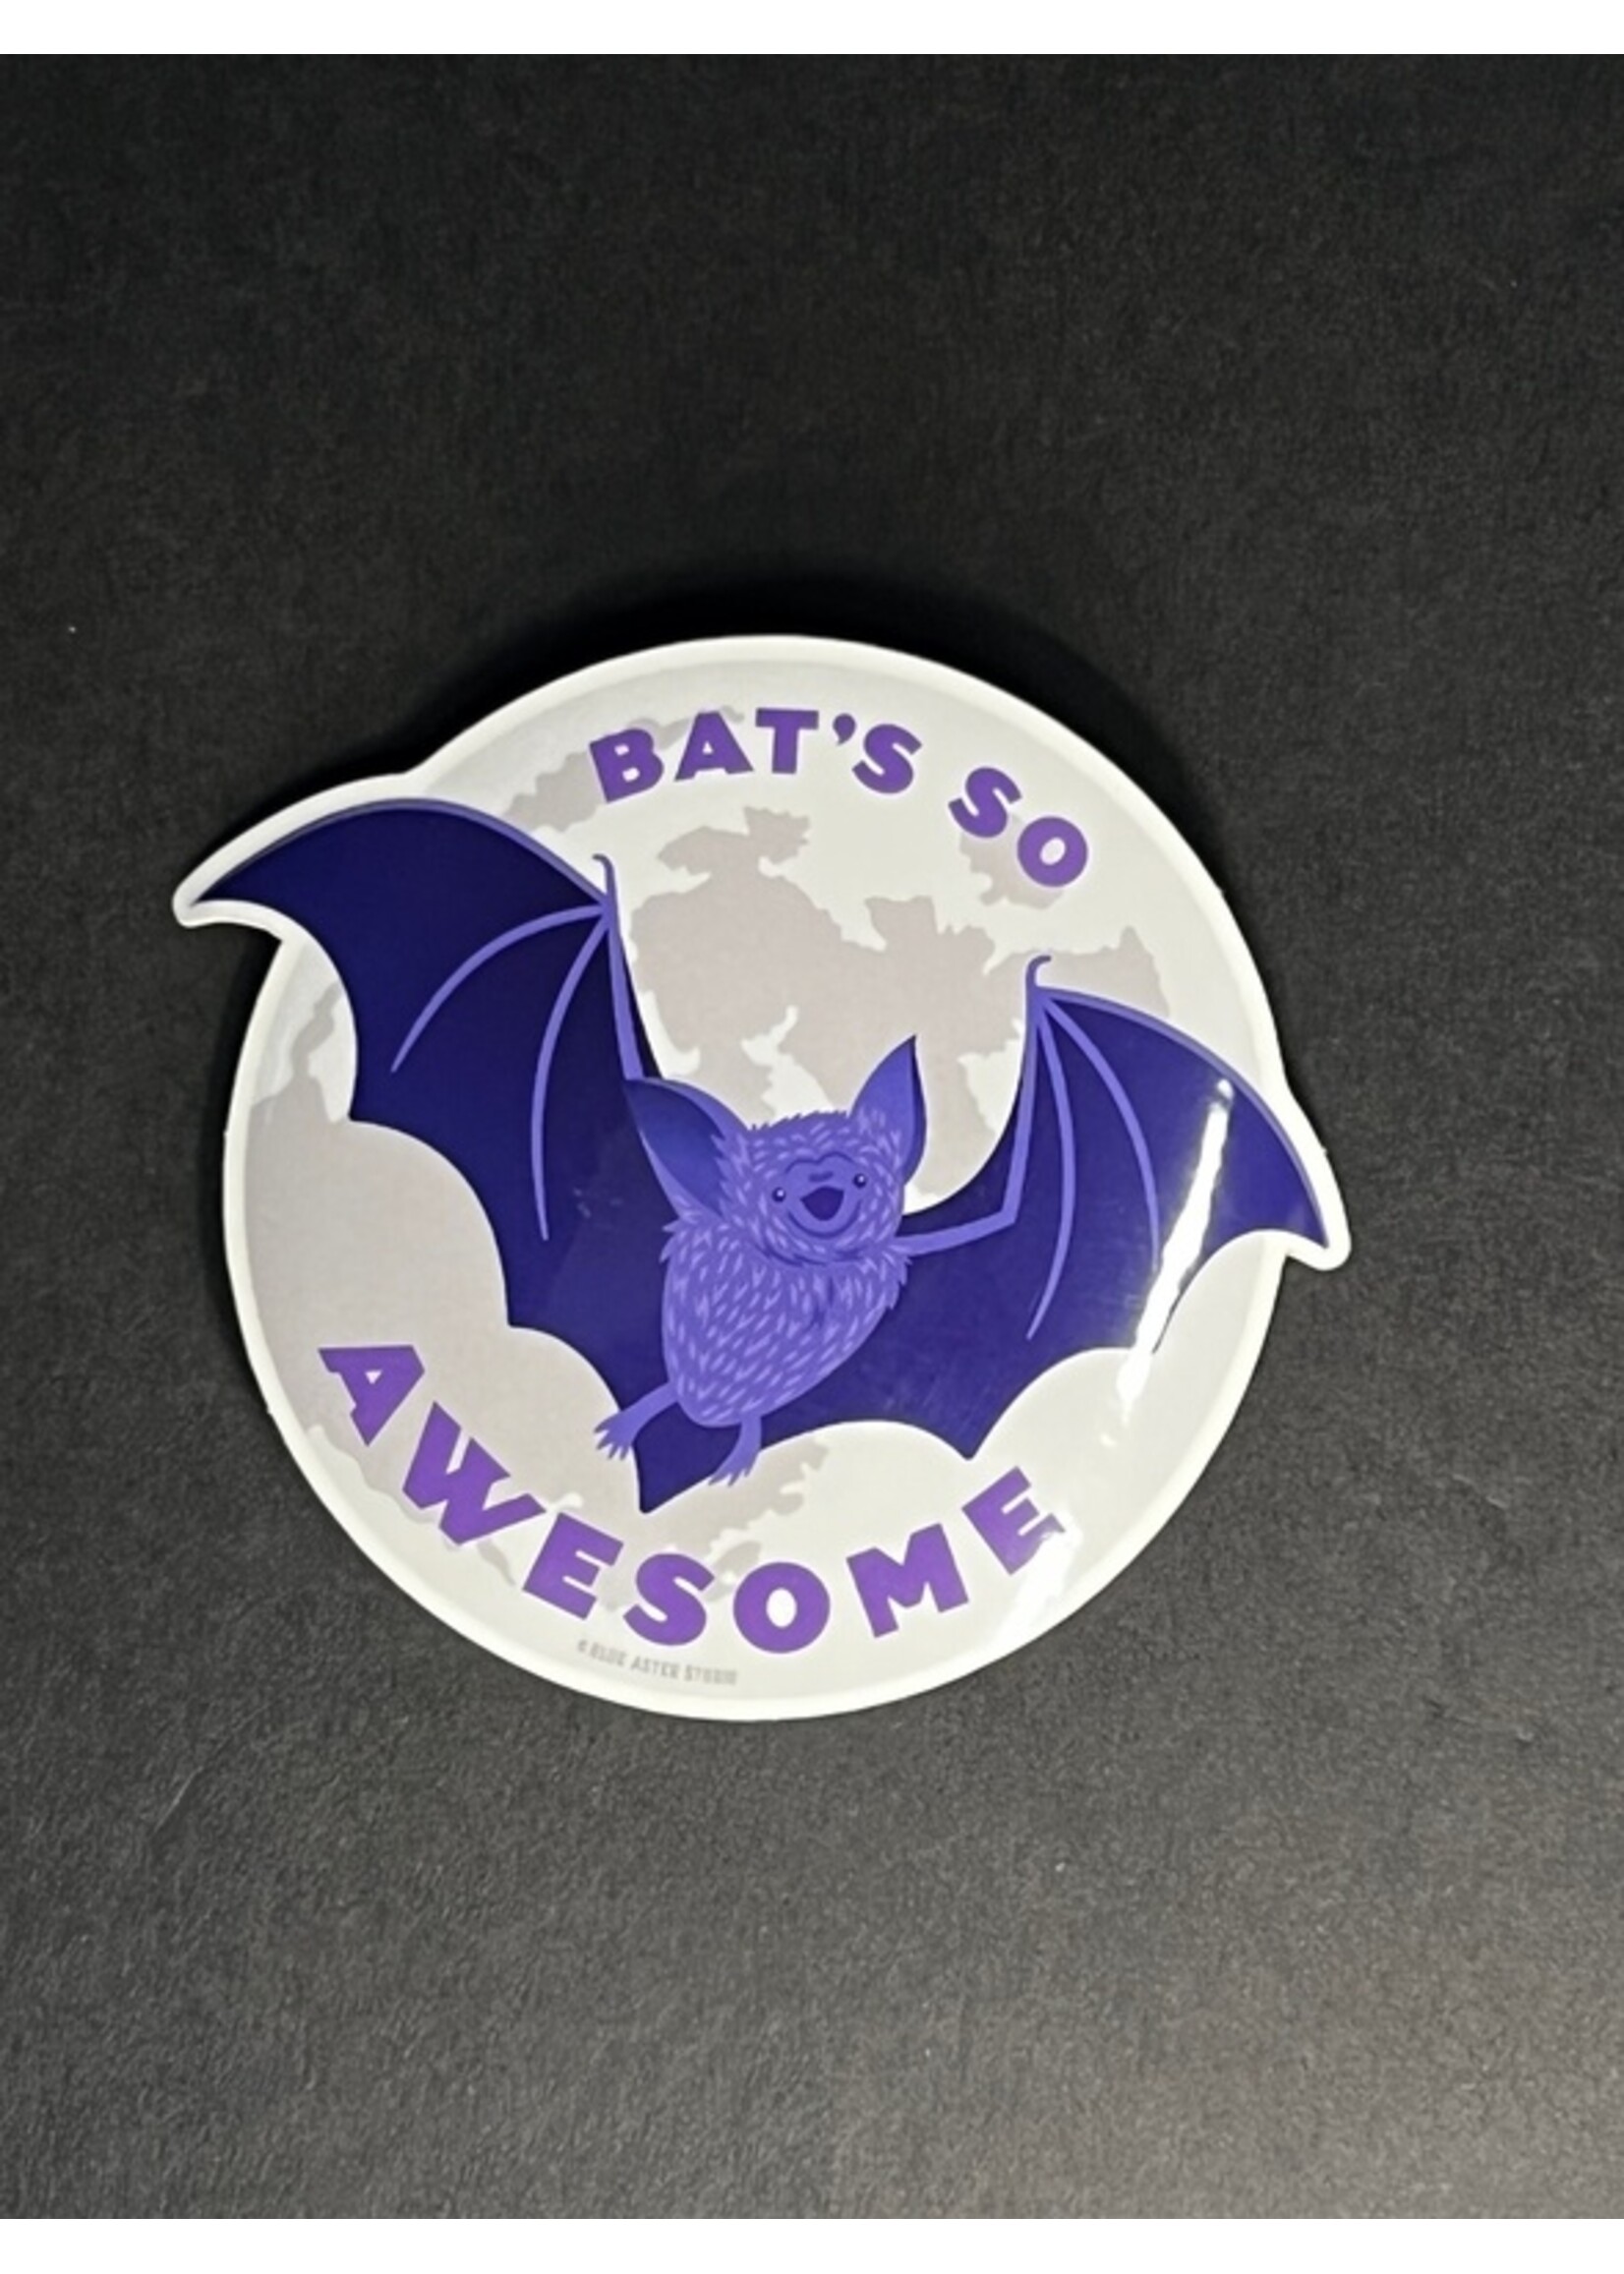 Rextooth Studios Bat Sticker, "Bats so Awesome"